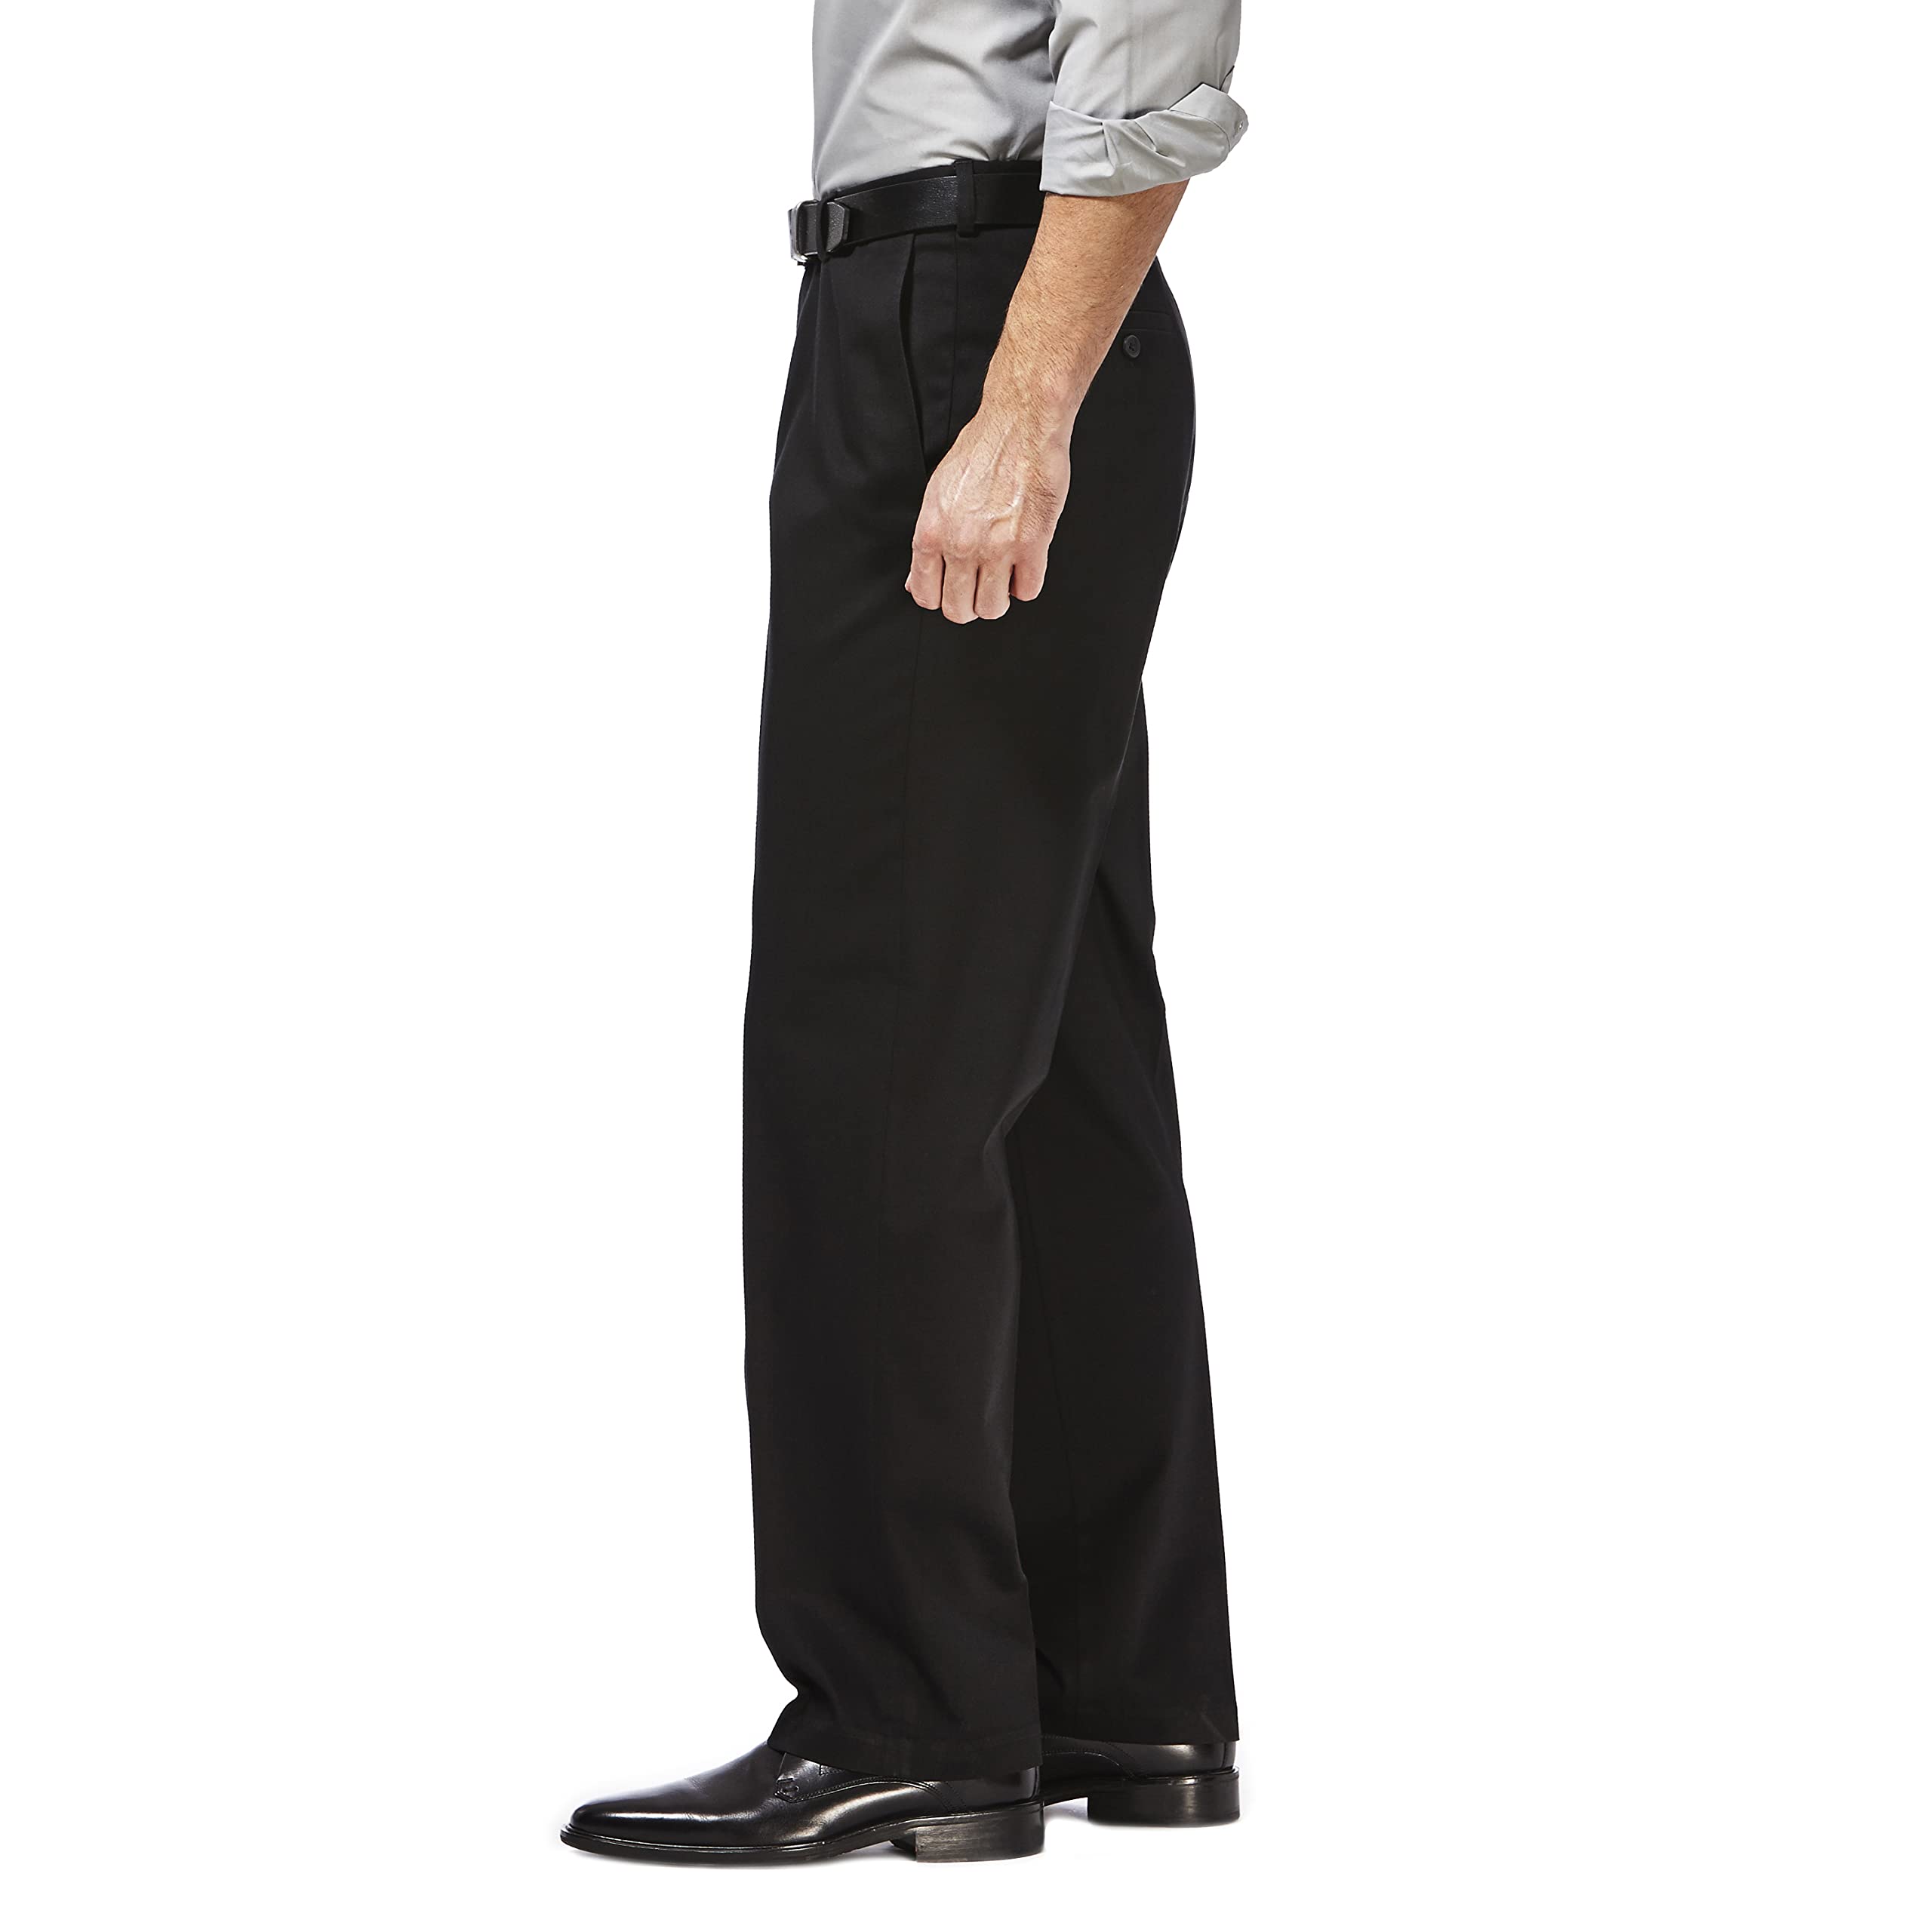 Haggar Men's Premium No Iron Khaki Classic Fit Expandable Waist Flat Front Pant Reg. and Big & Tall Sizes